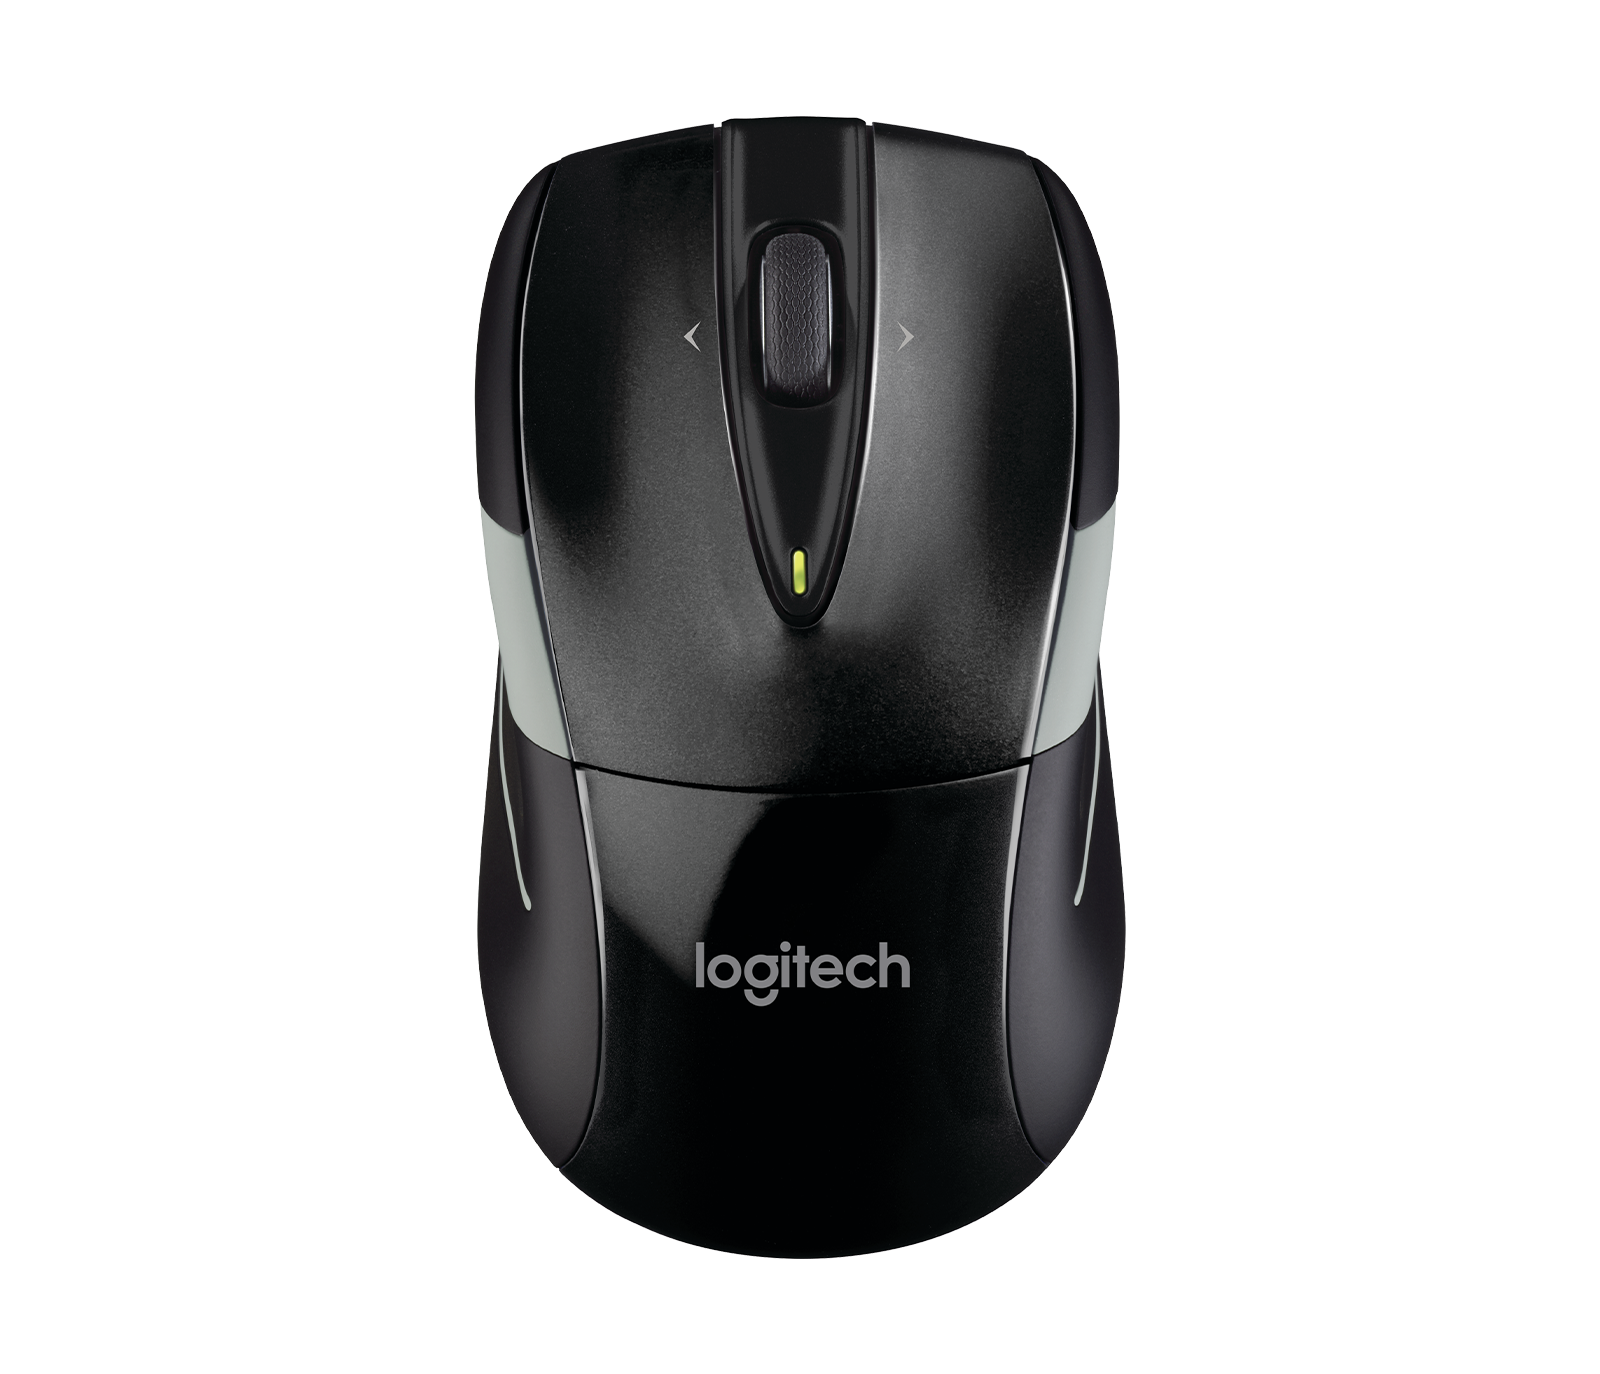 aktivering Rekvisitter berolige Logitech M525 Wireless Mouse with Precision Scrolling